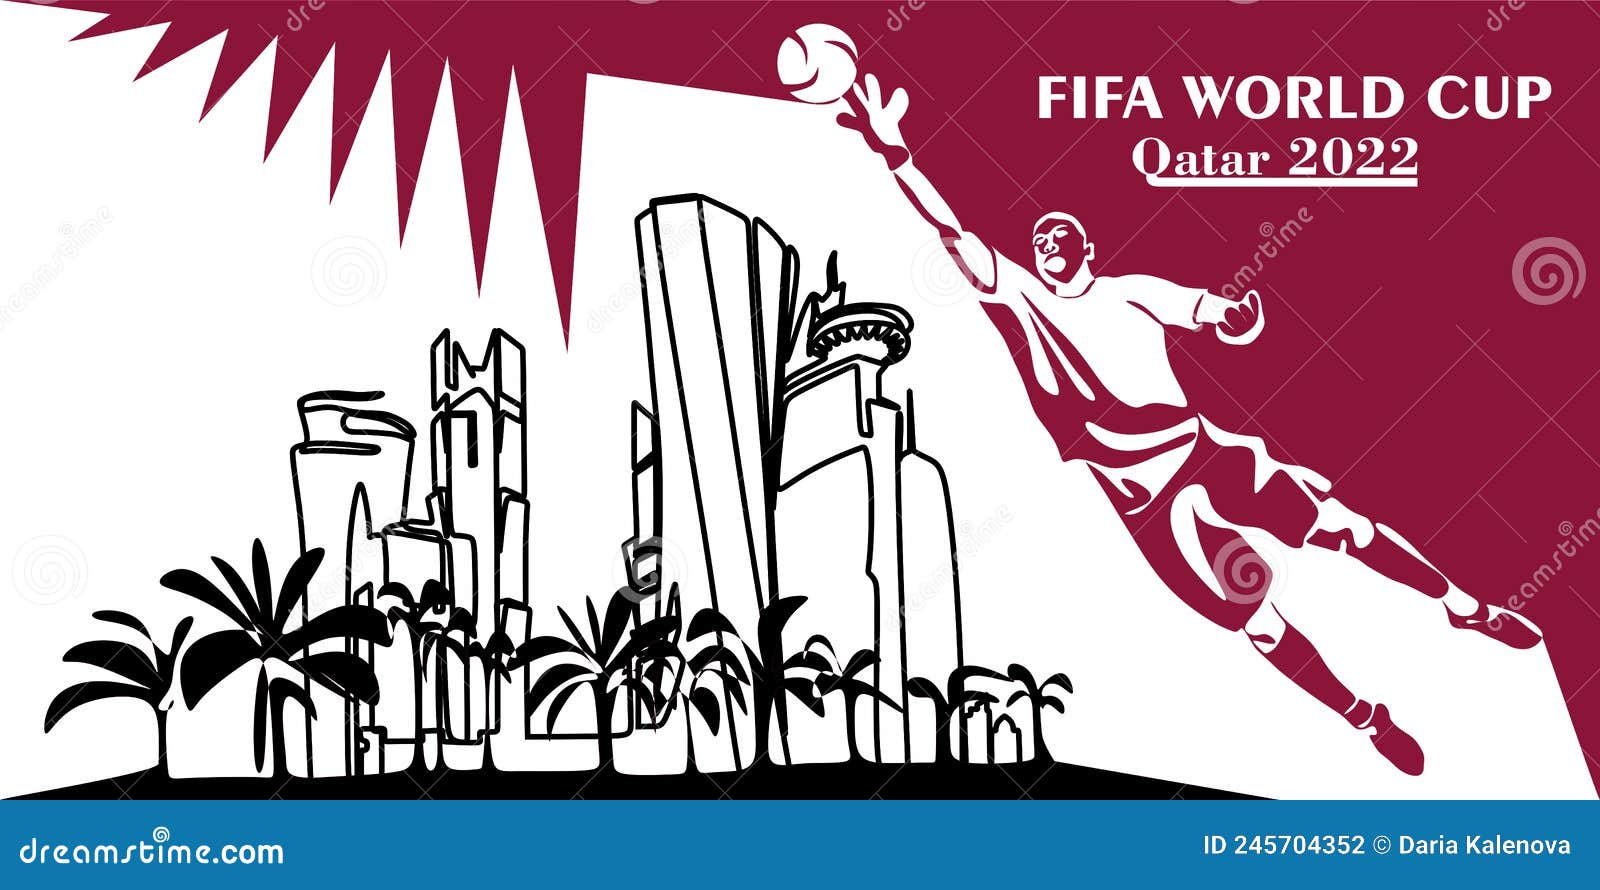 Premium Vector  Fifa world cup qatar 2022 logo stylized vector